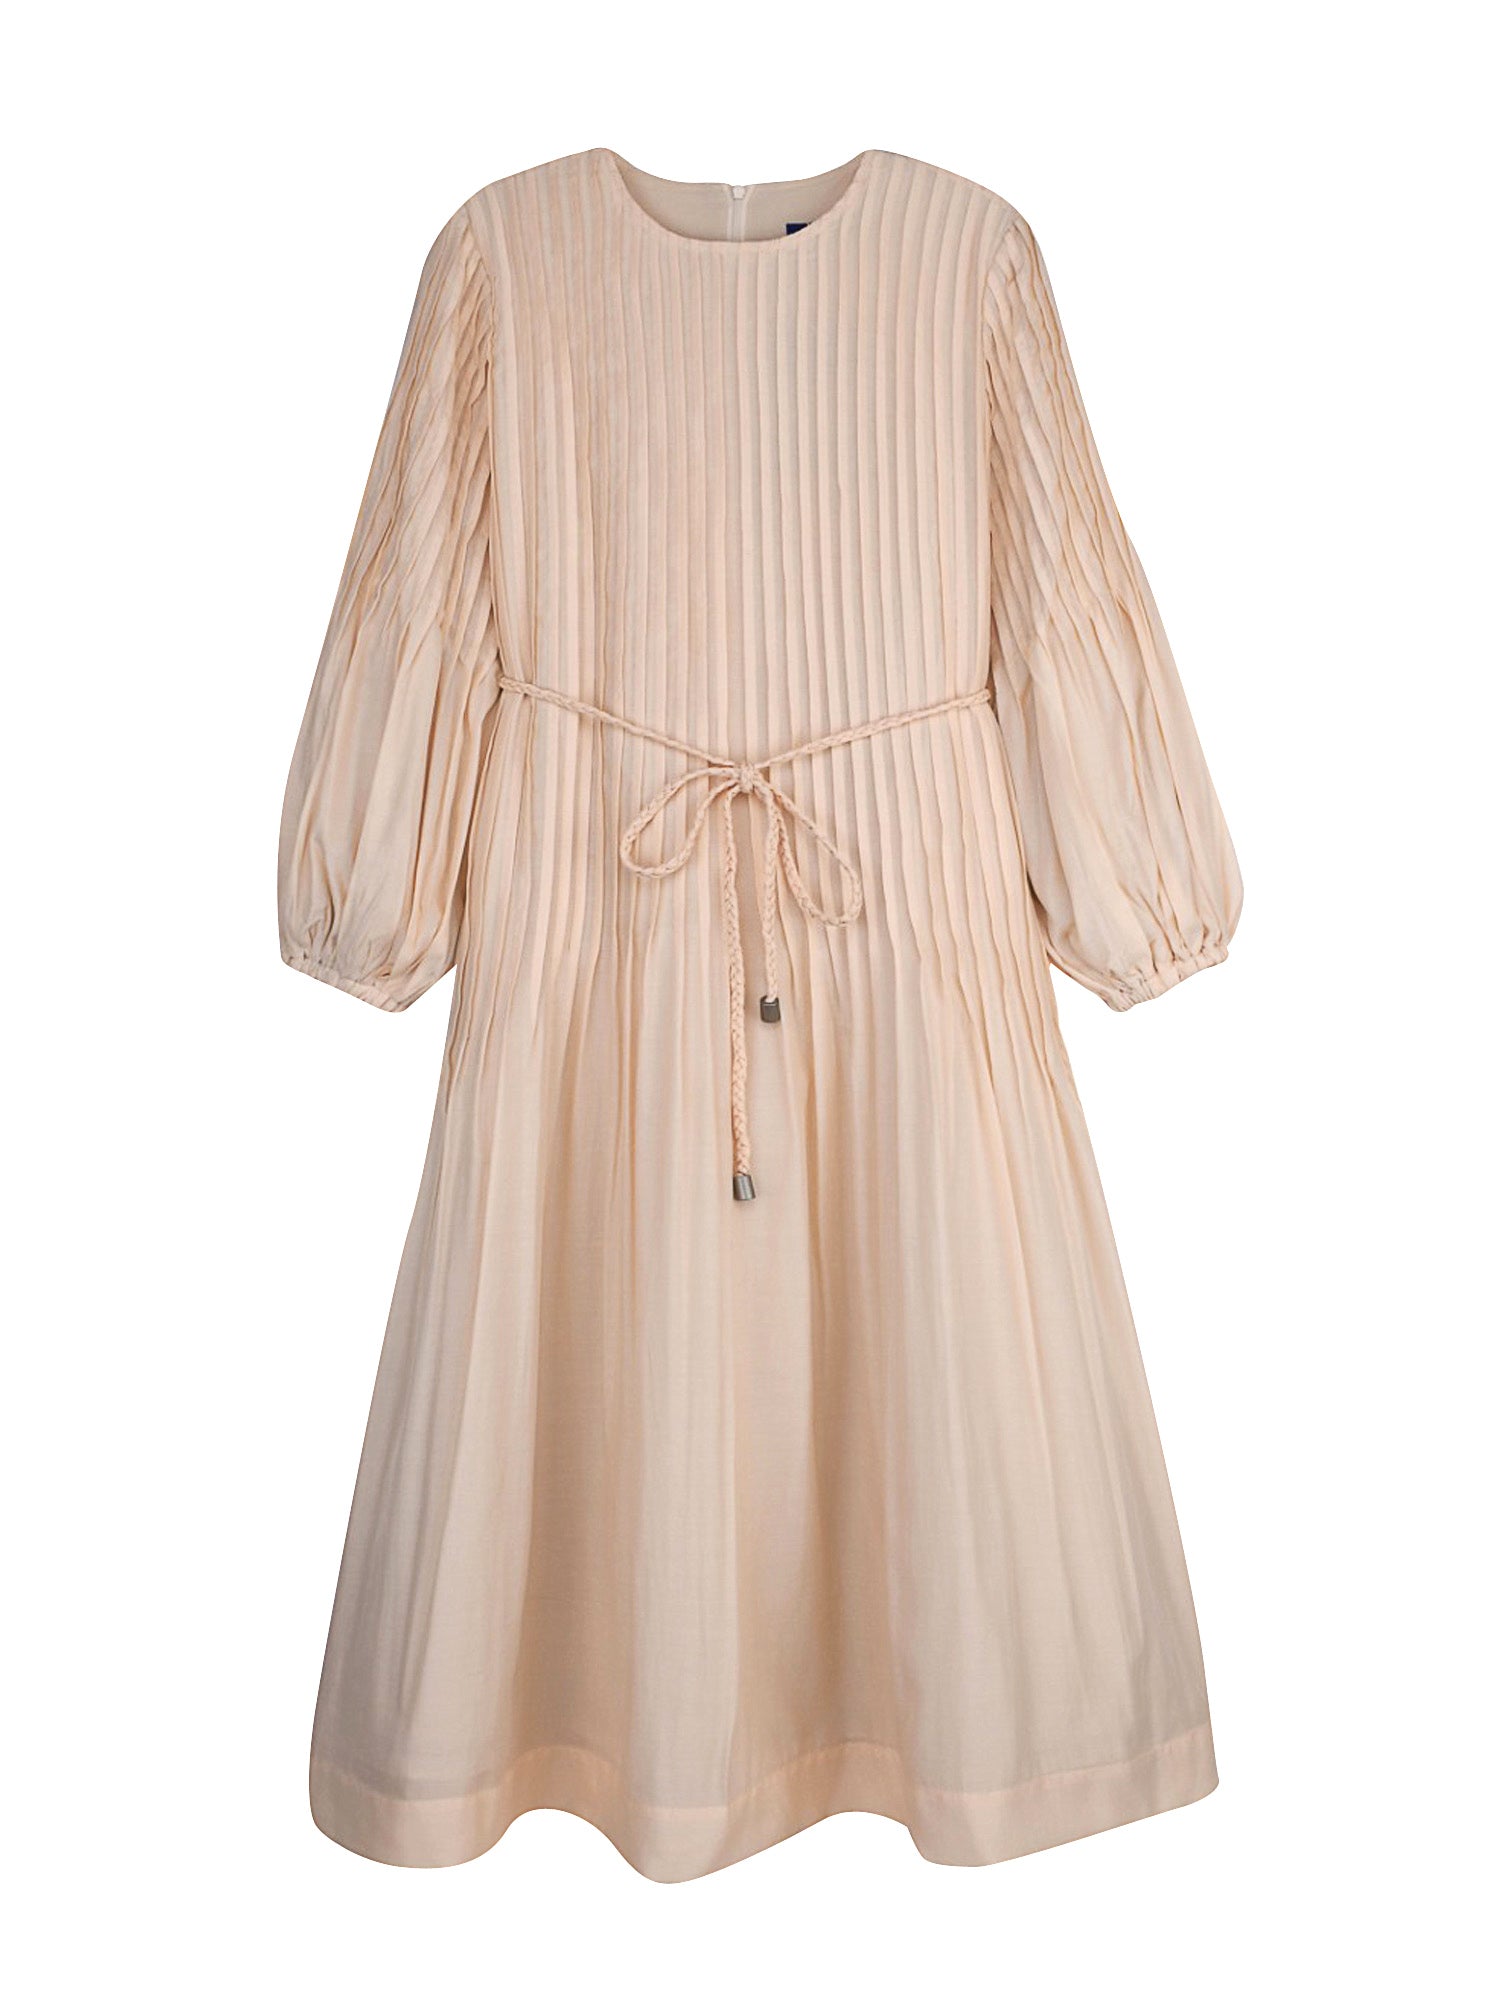 Dominic Peach Pleated Dress - Dresses